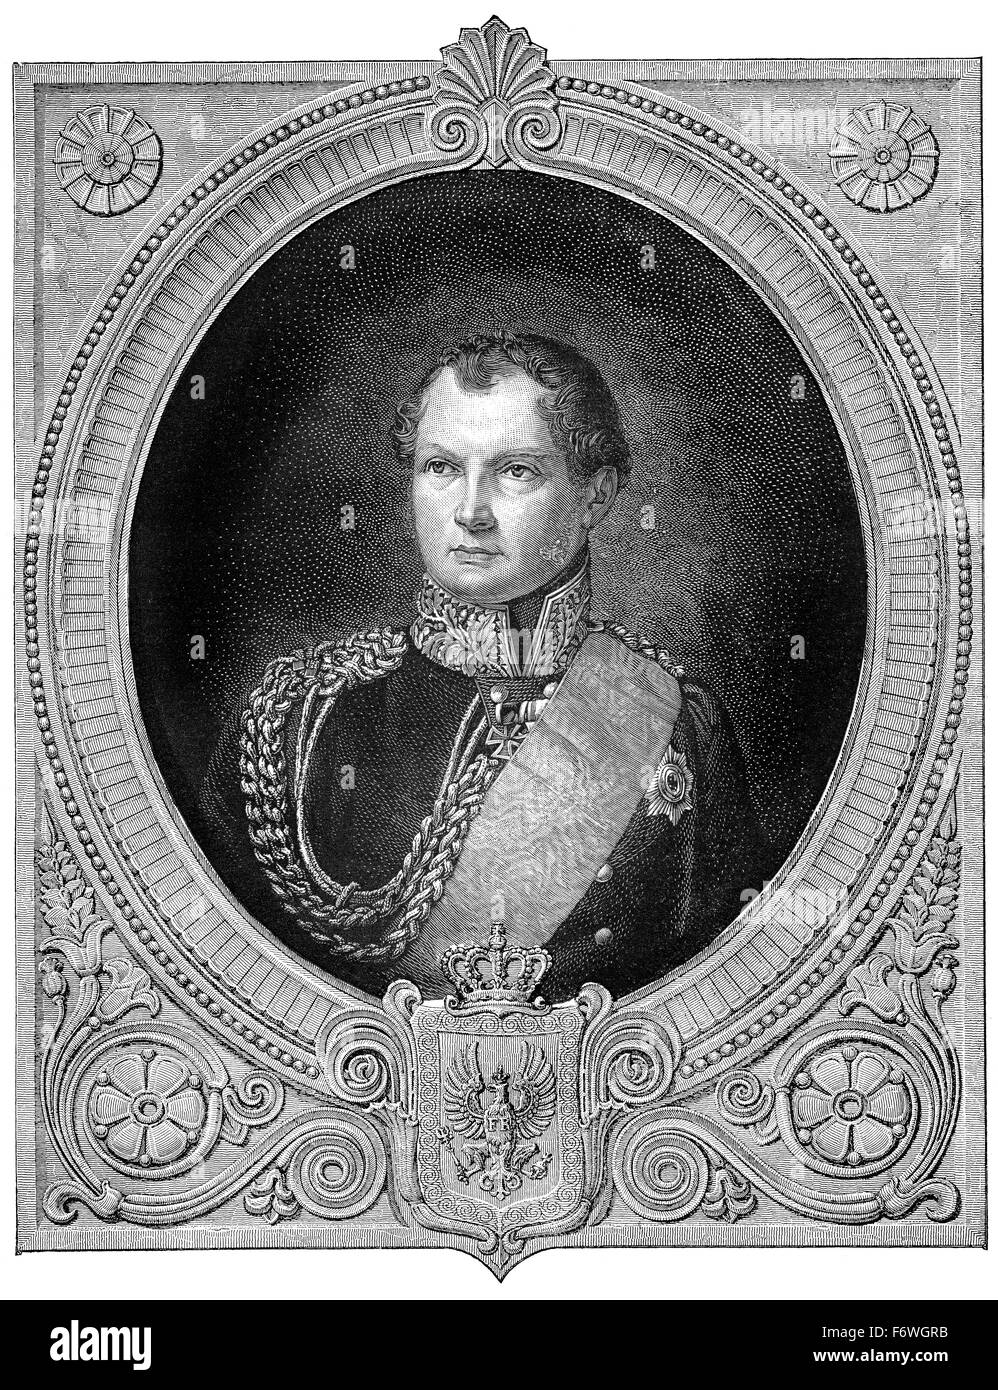 Portrait of Frederick William IV or Friedrich Wilhelm IV.; 1795 - 1861,  King of Prussia, Friedrich Wilhelm IV. Stock Photo